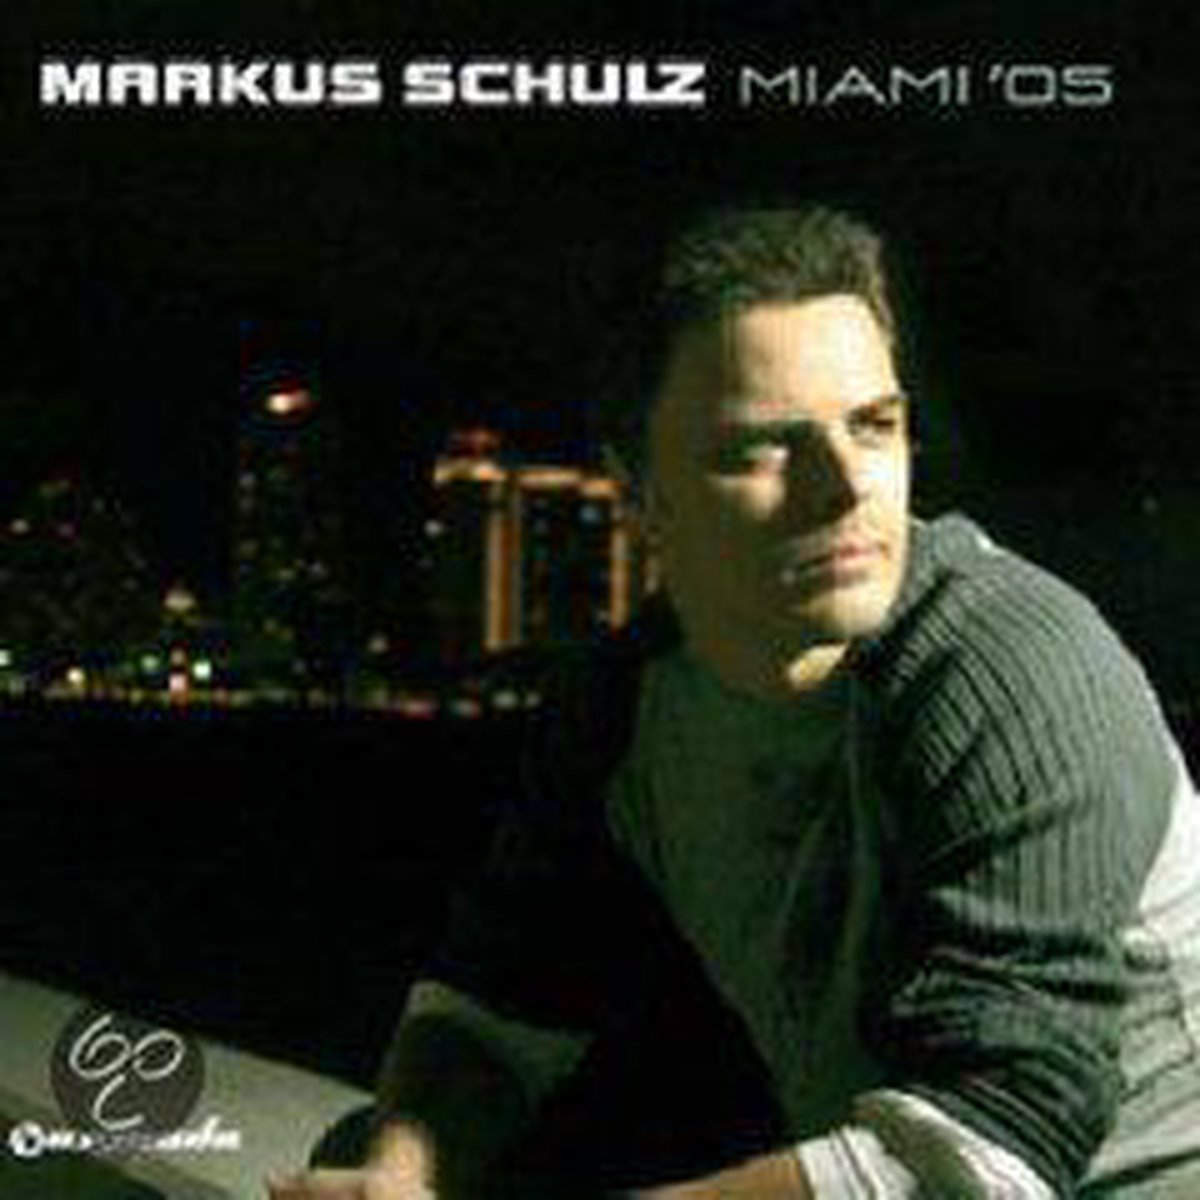 Miami 05 - various artists